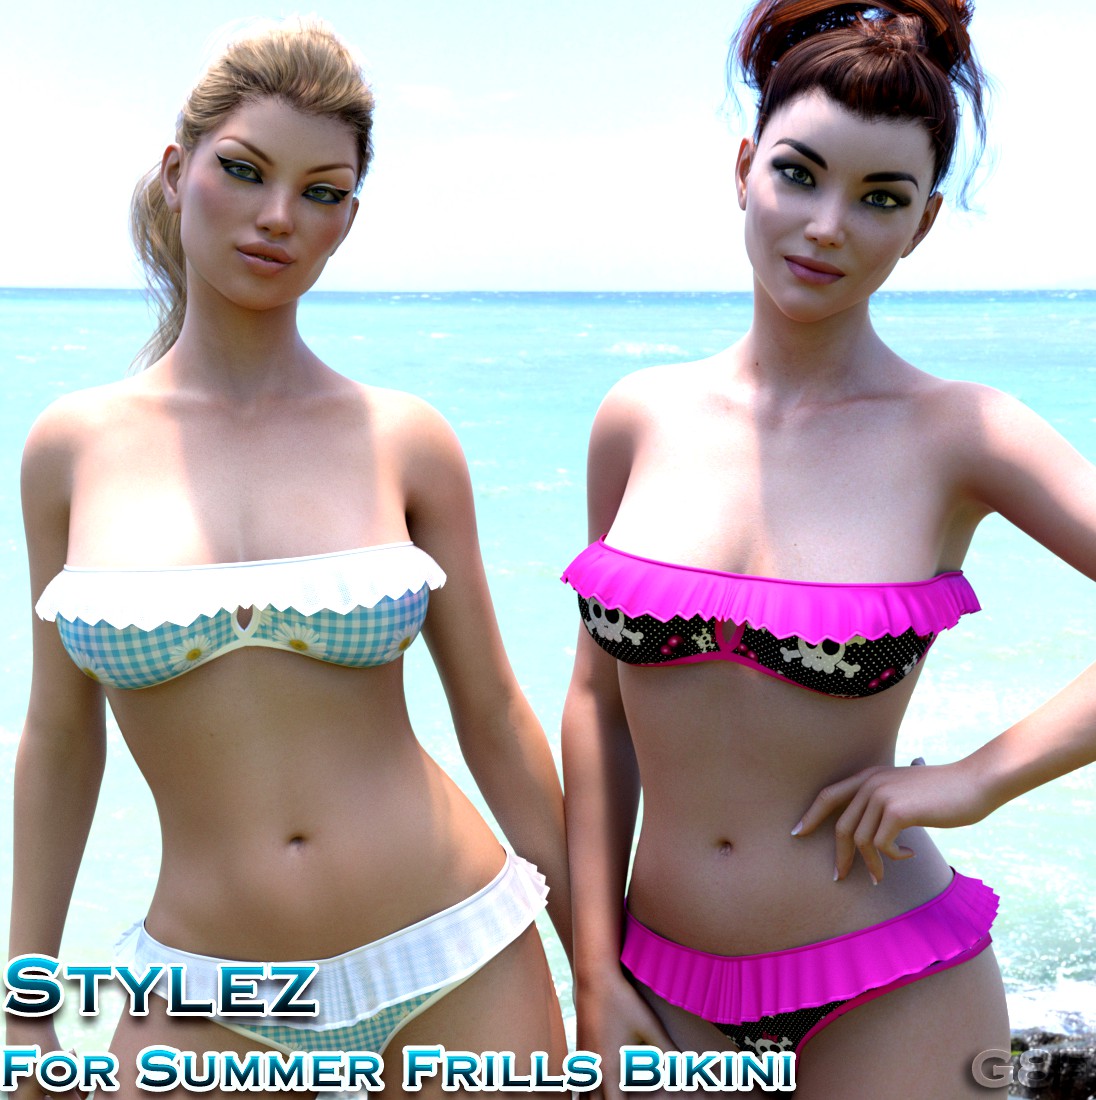 Stylez For Summer Frills Bikini